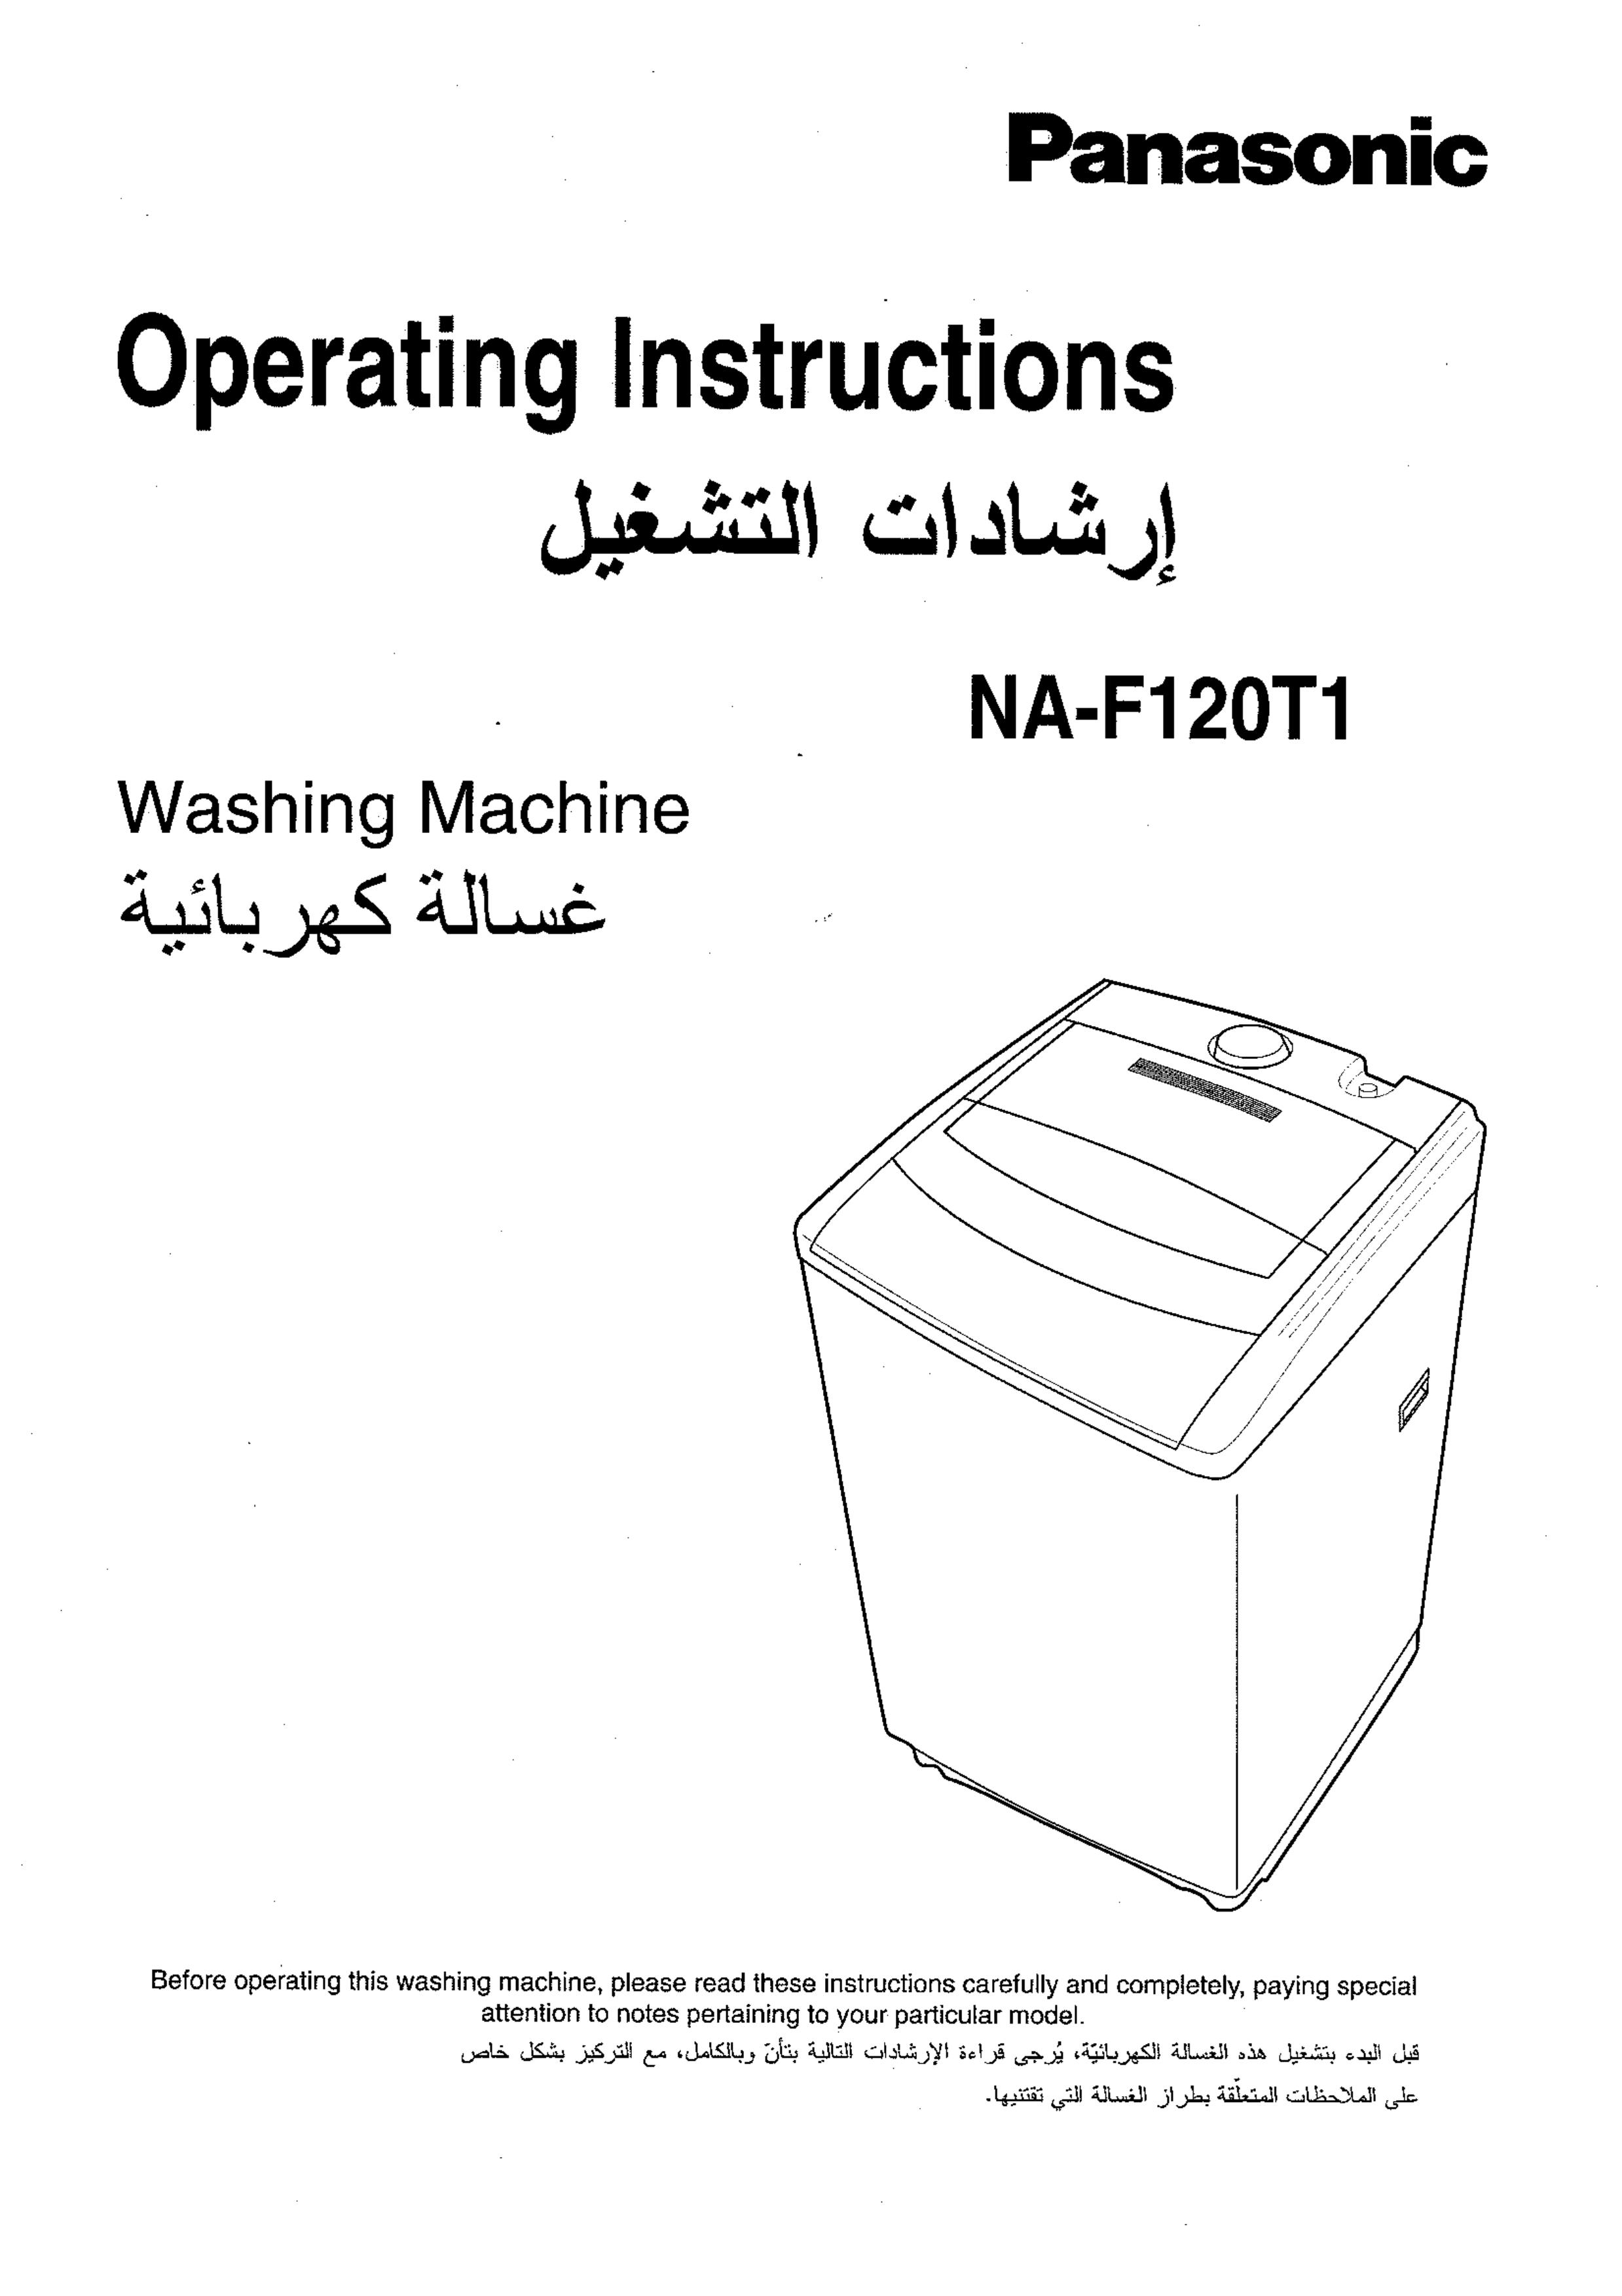 Panasonic NA-F120T1 Washer User Manual